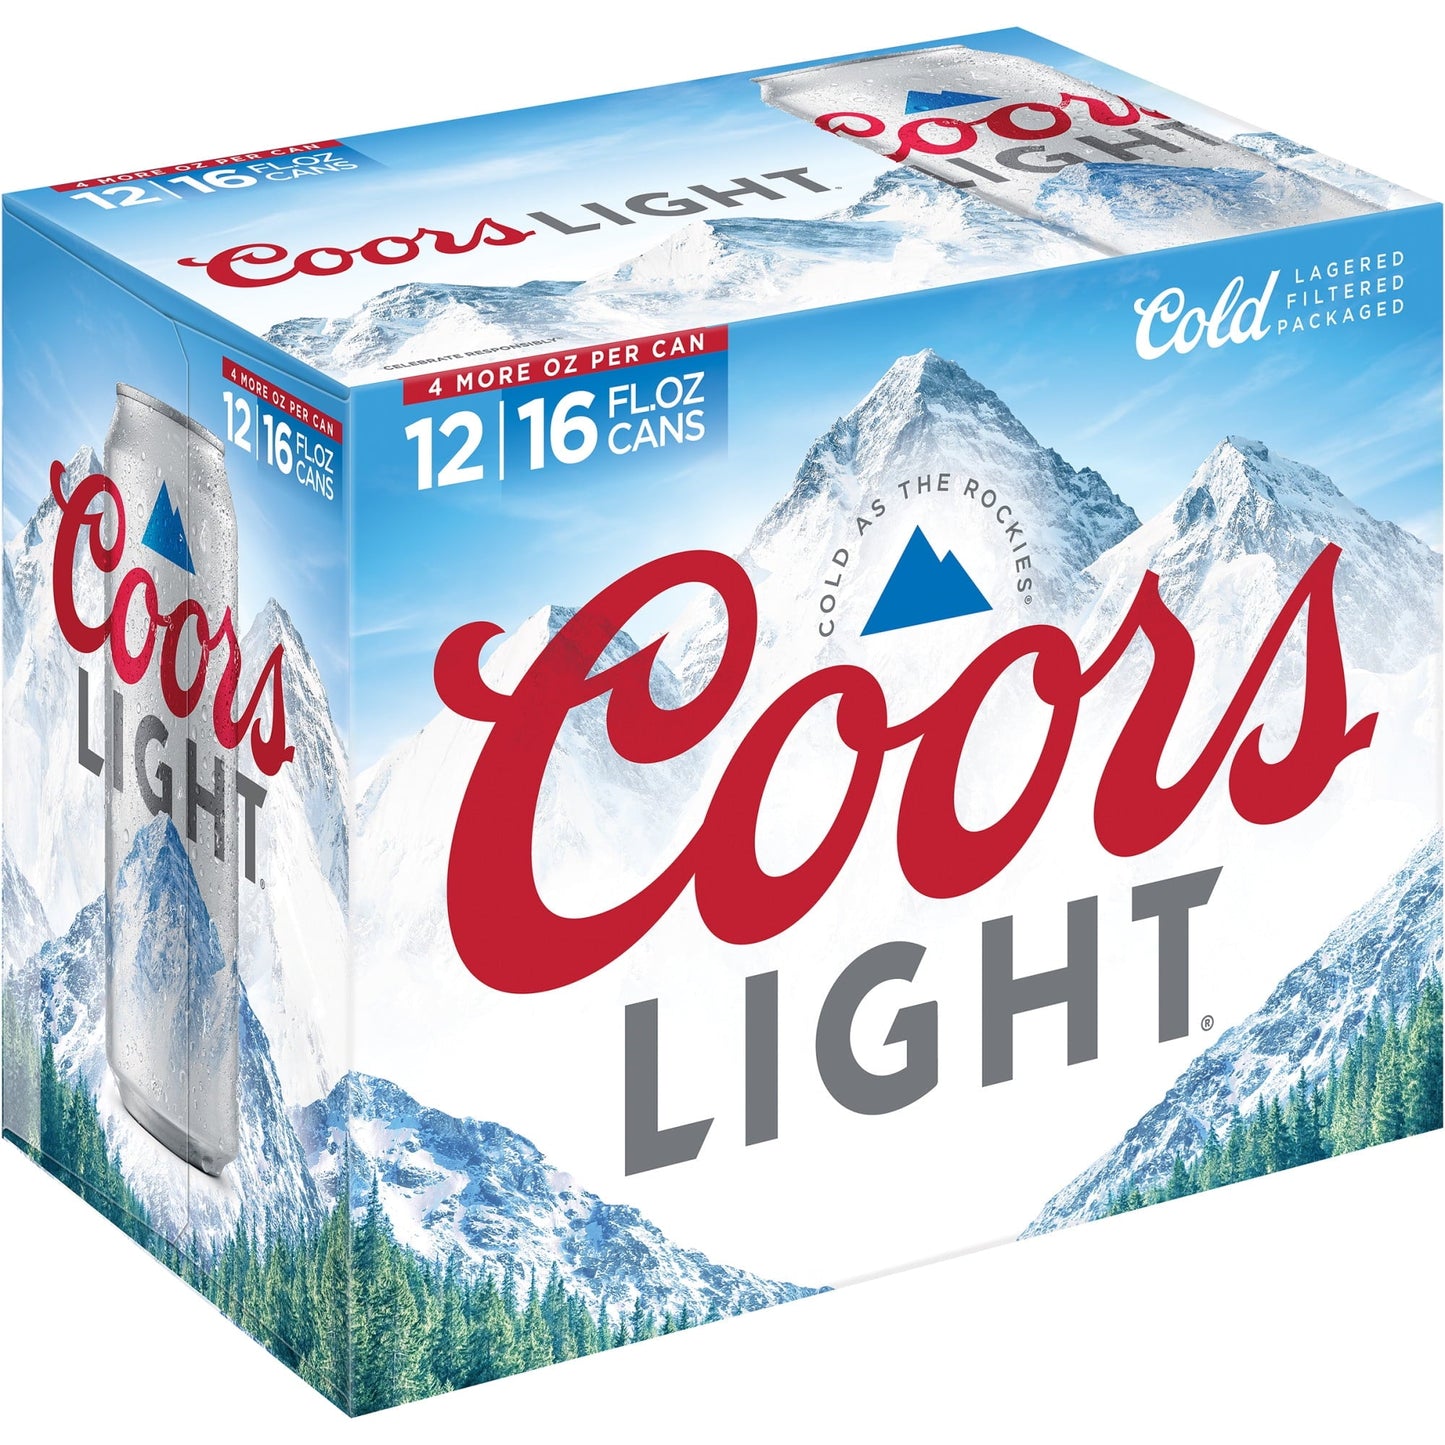 Coors Light Lager Beer, 12 Pack, 16 fl oz Cans, 4.2% ABV